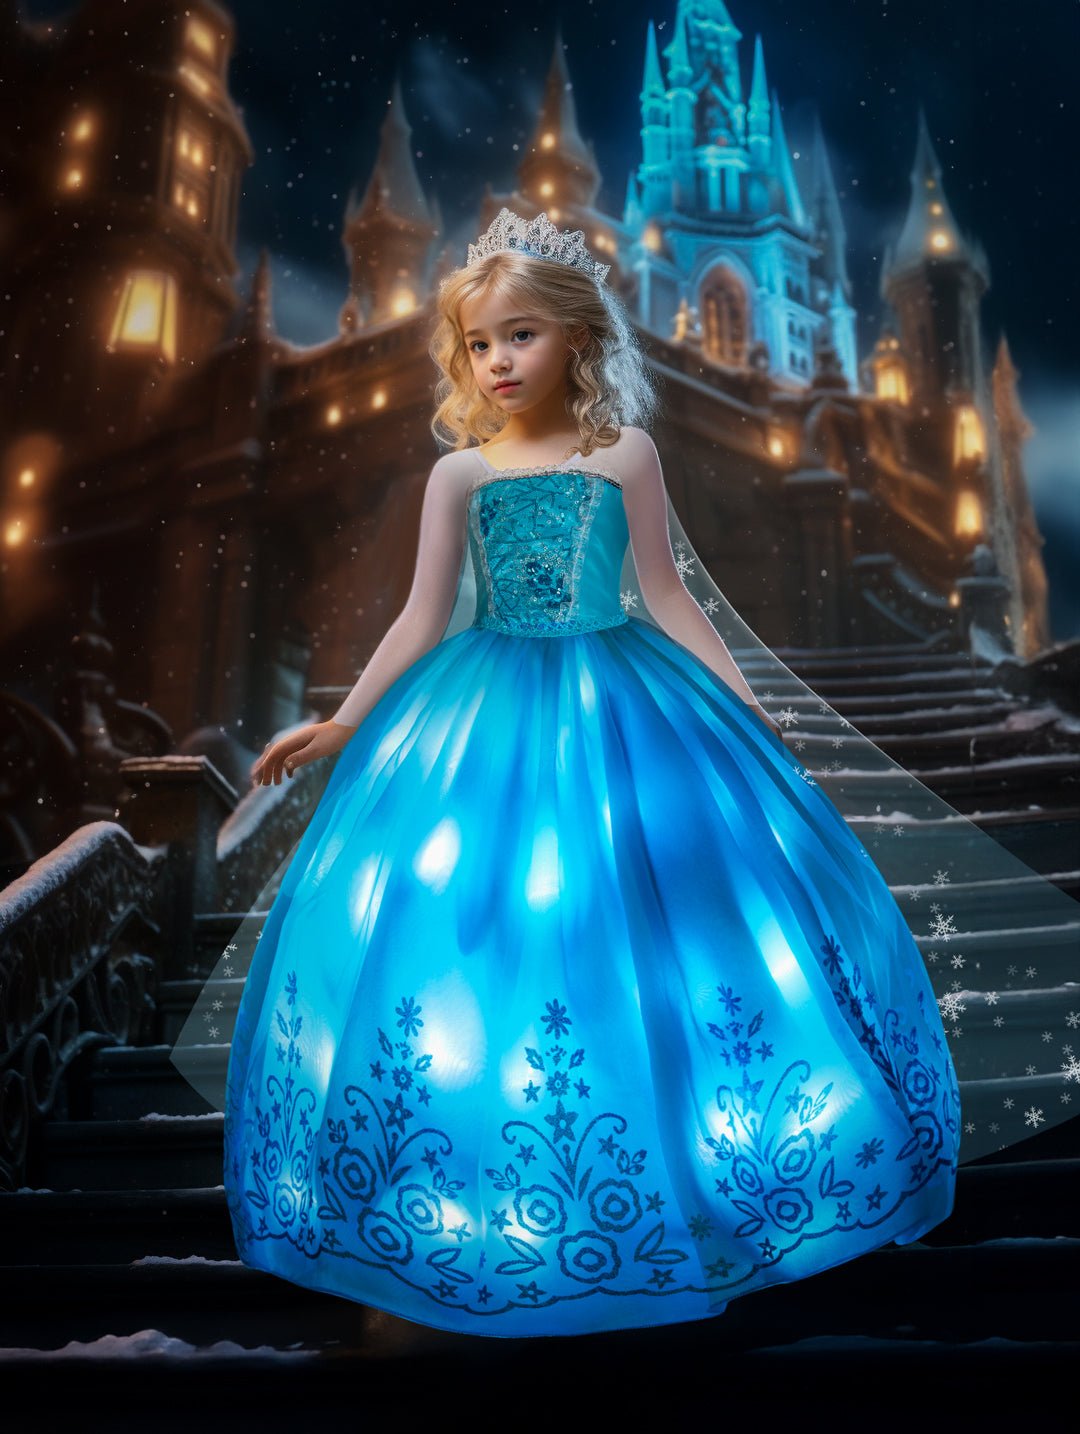 Led Princess Dress 